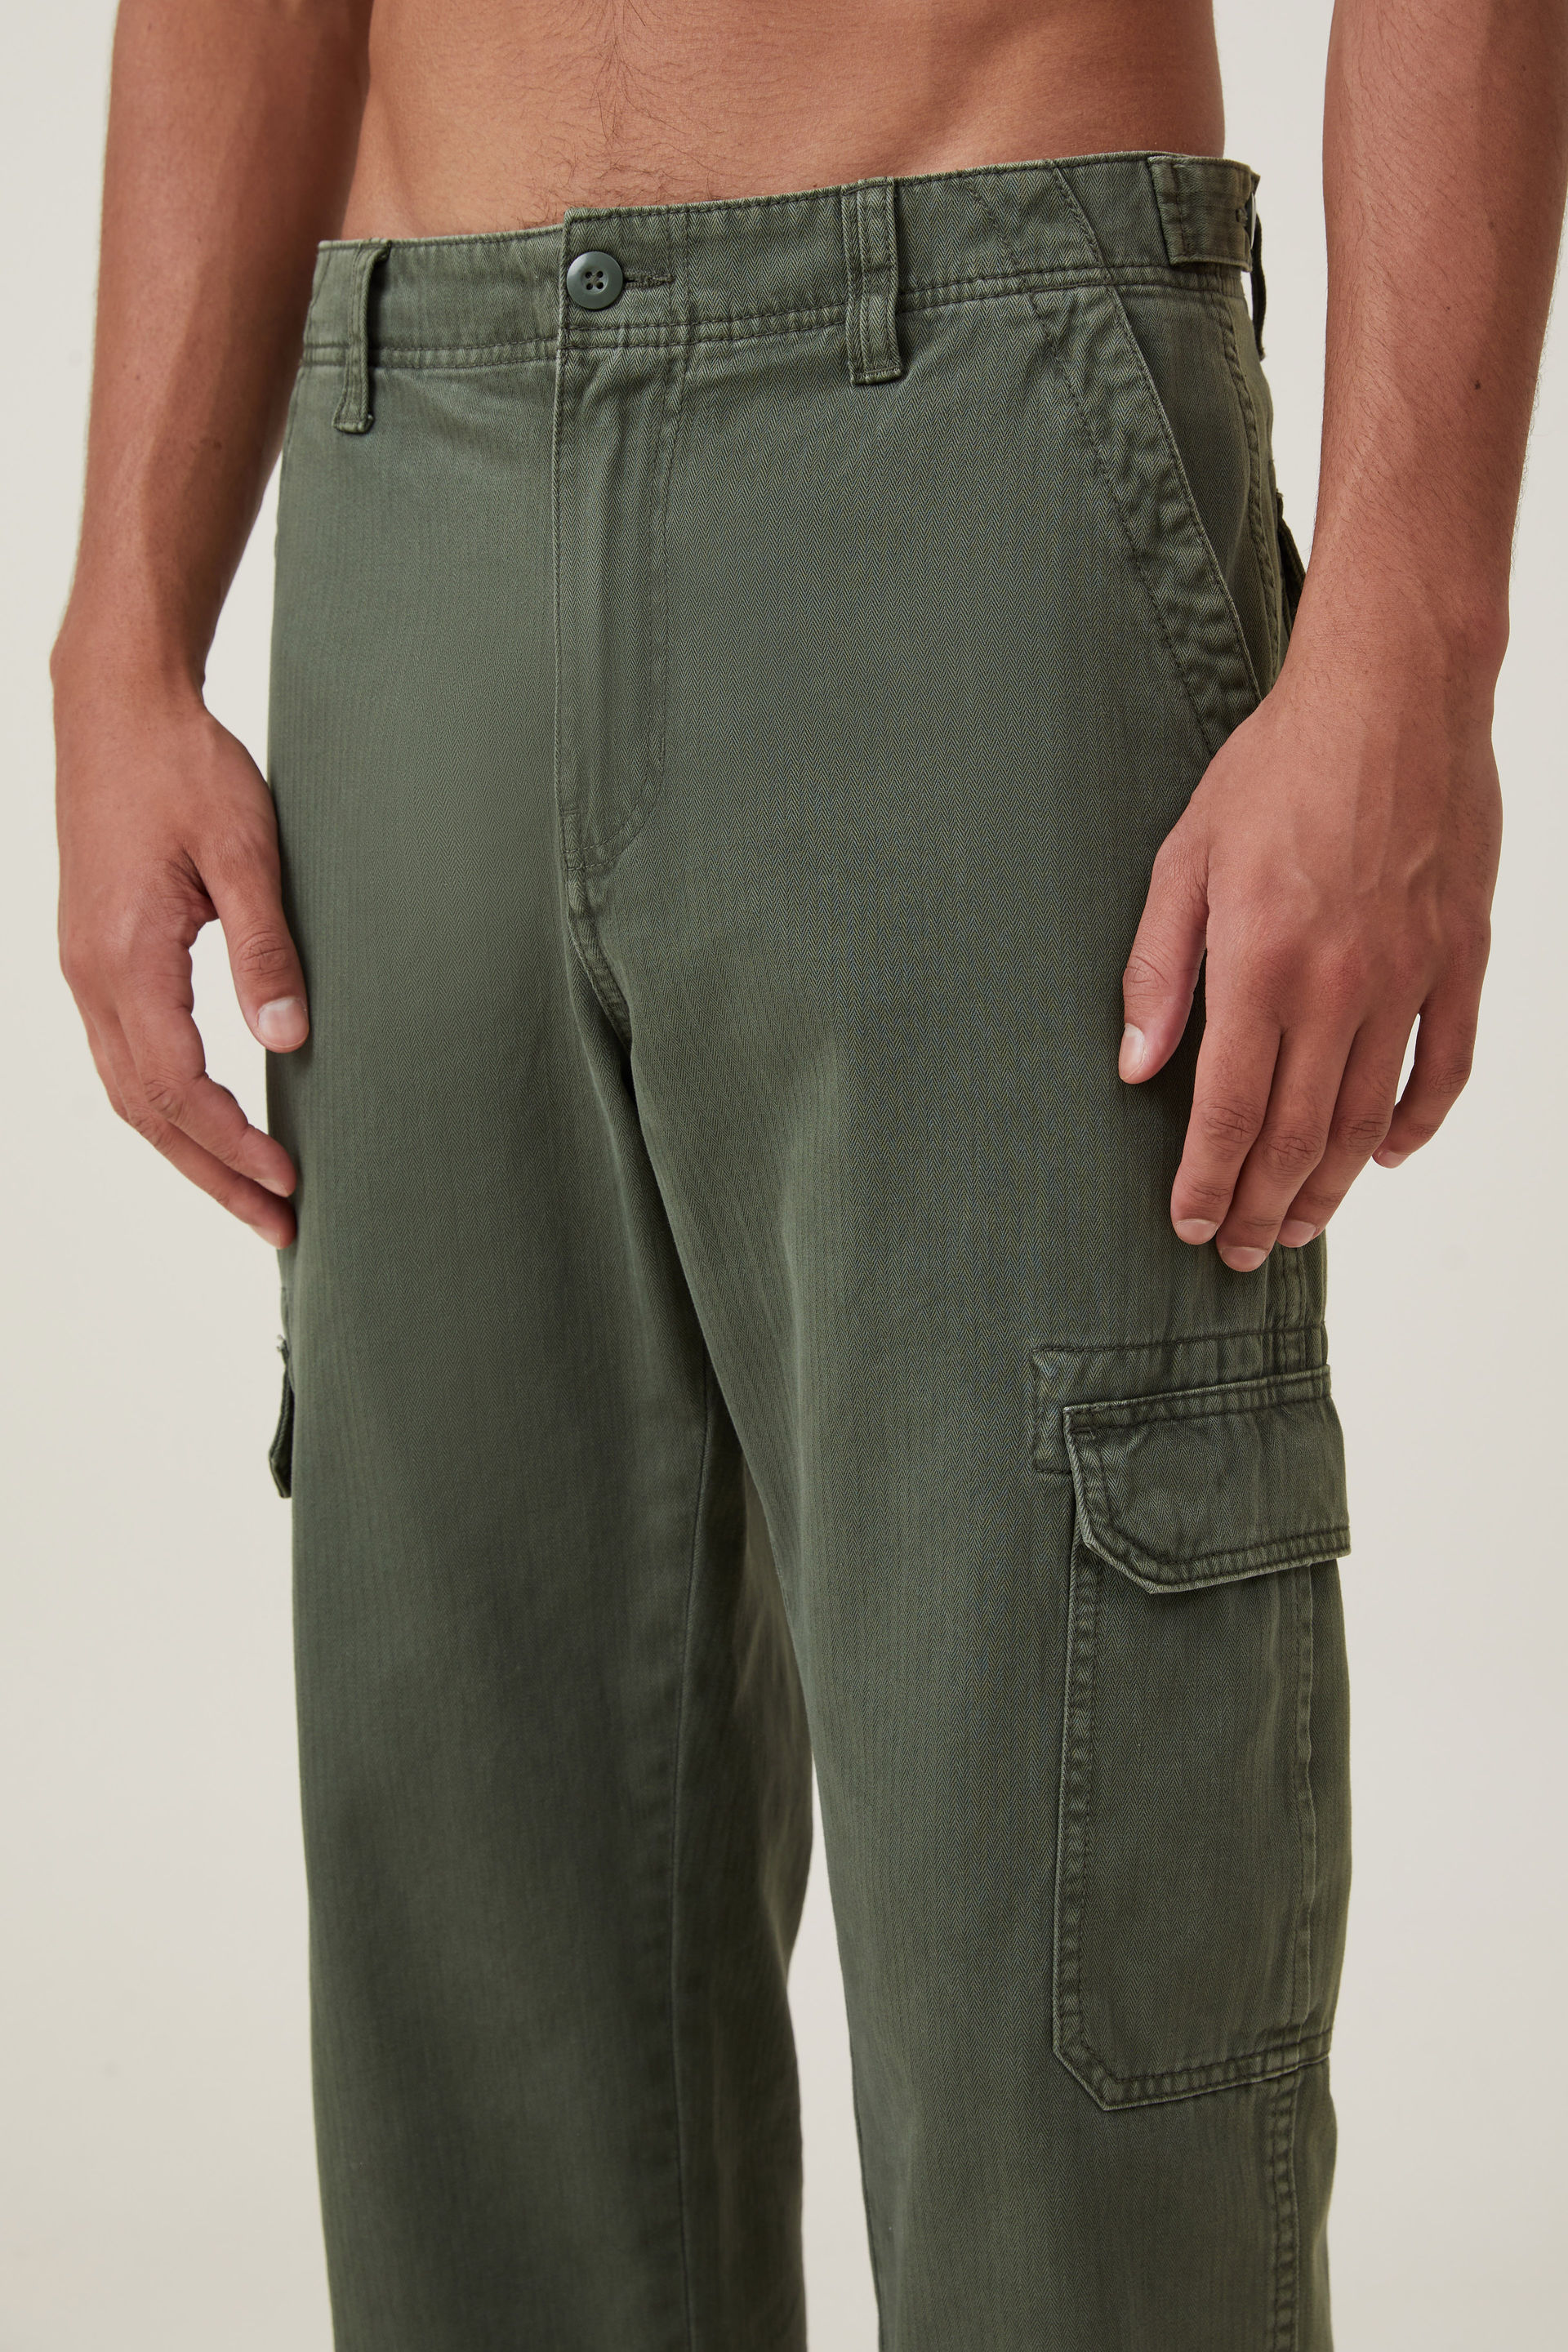 Cotton On Men - Tactical Cargo Pant - Vintage Army Green Herringbone